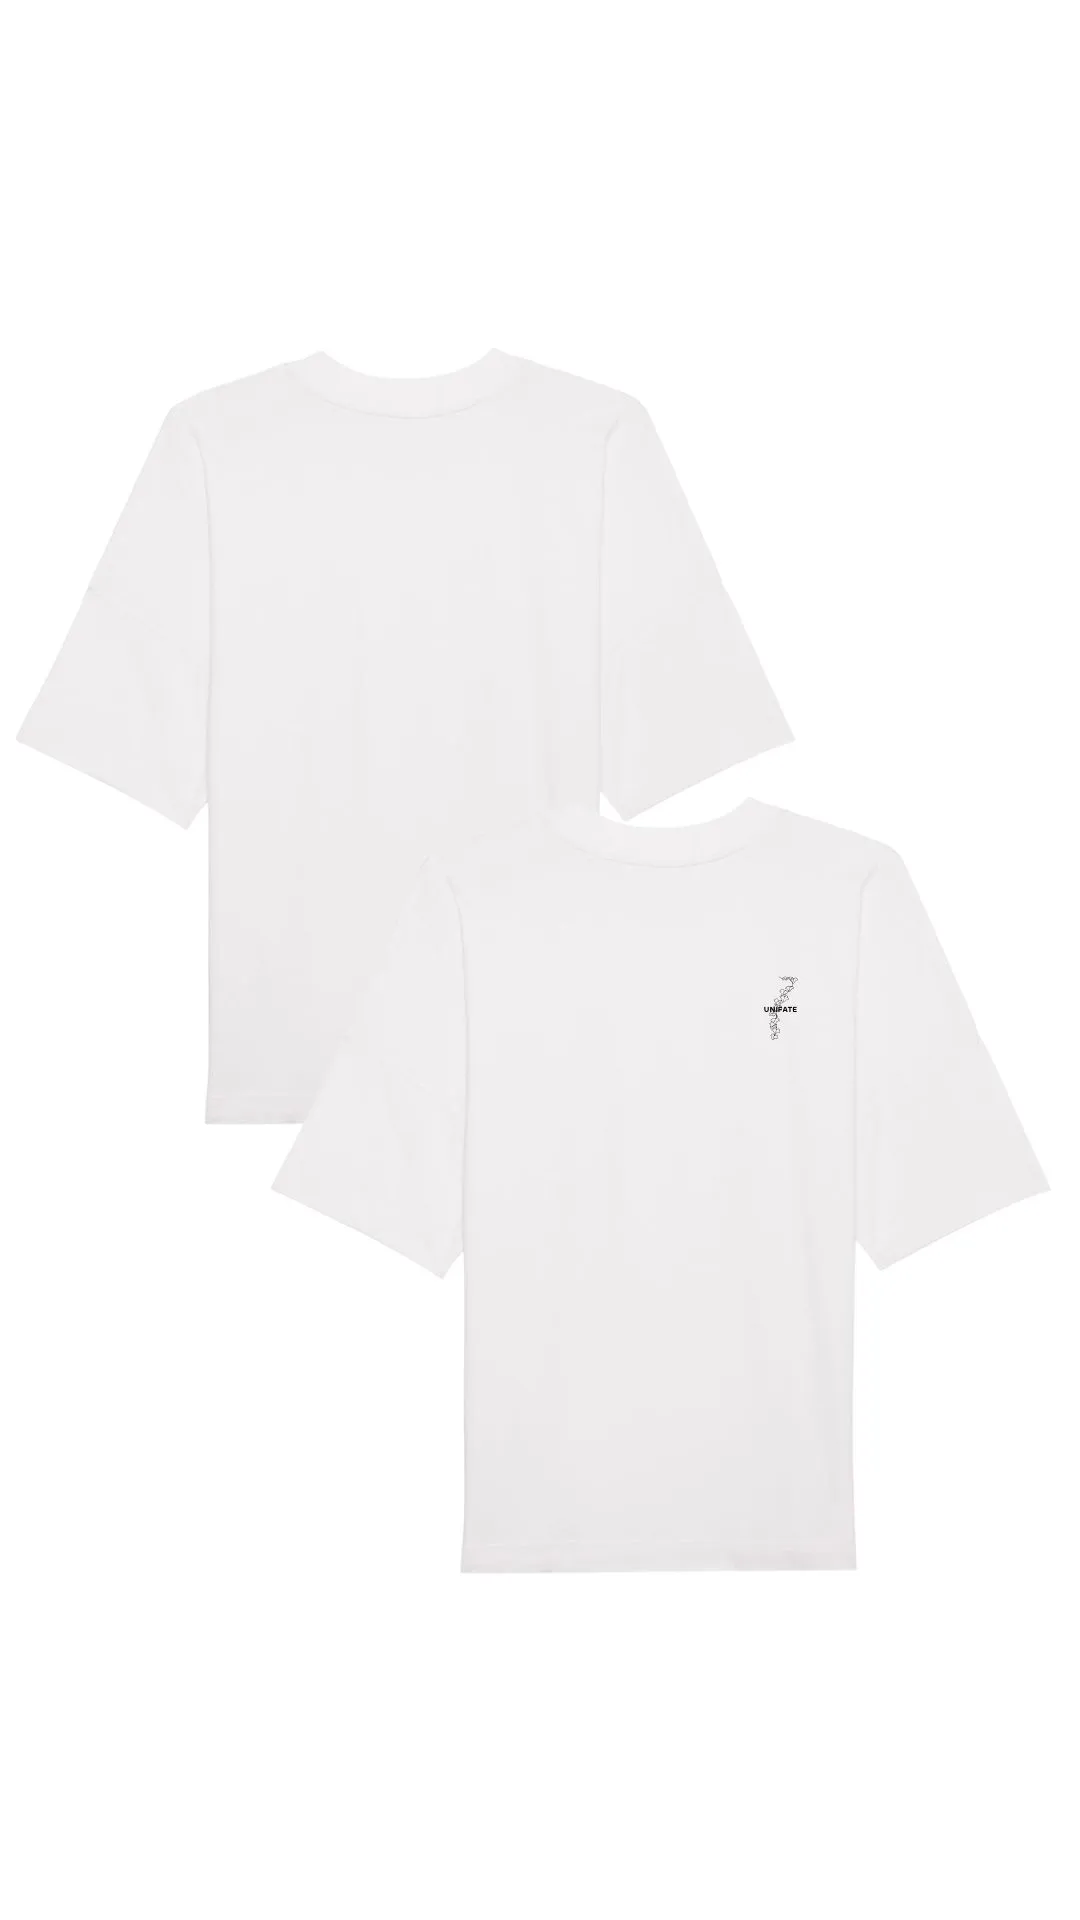 unifate-marque-responsable-rennes-collection-flore-ete-tee-shirt-blanc